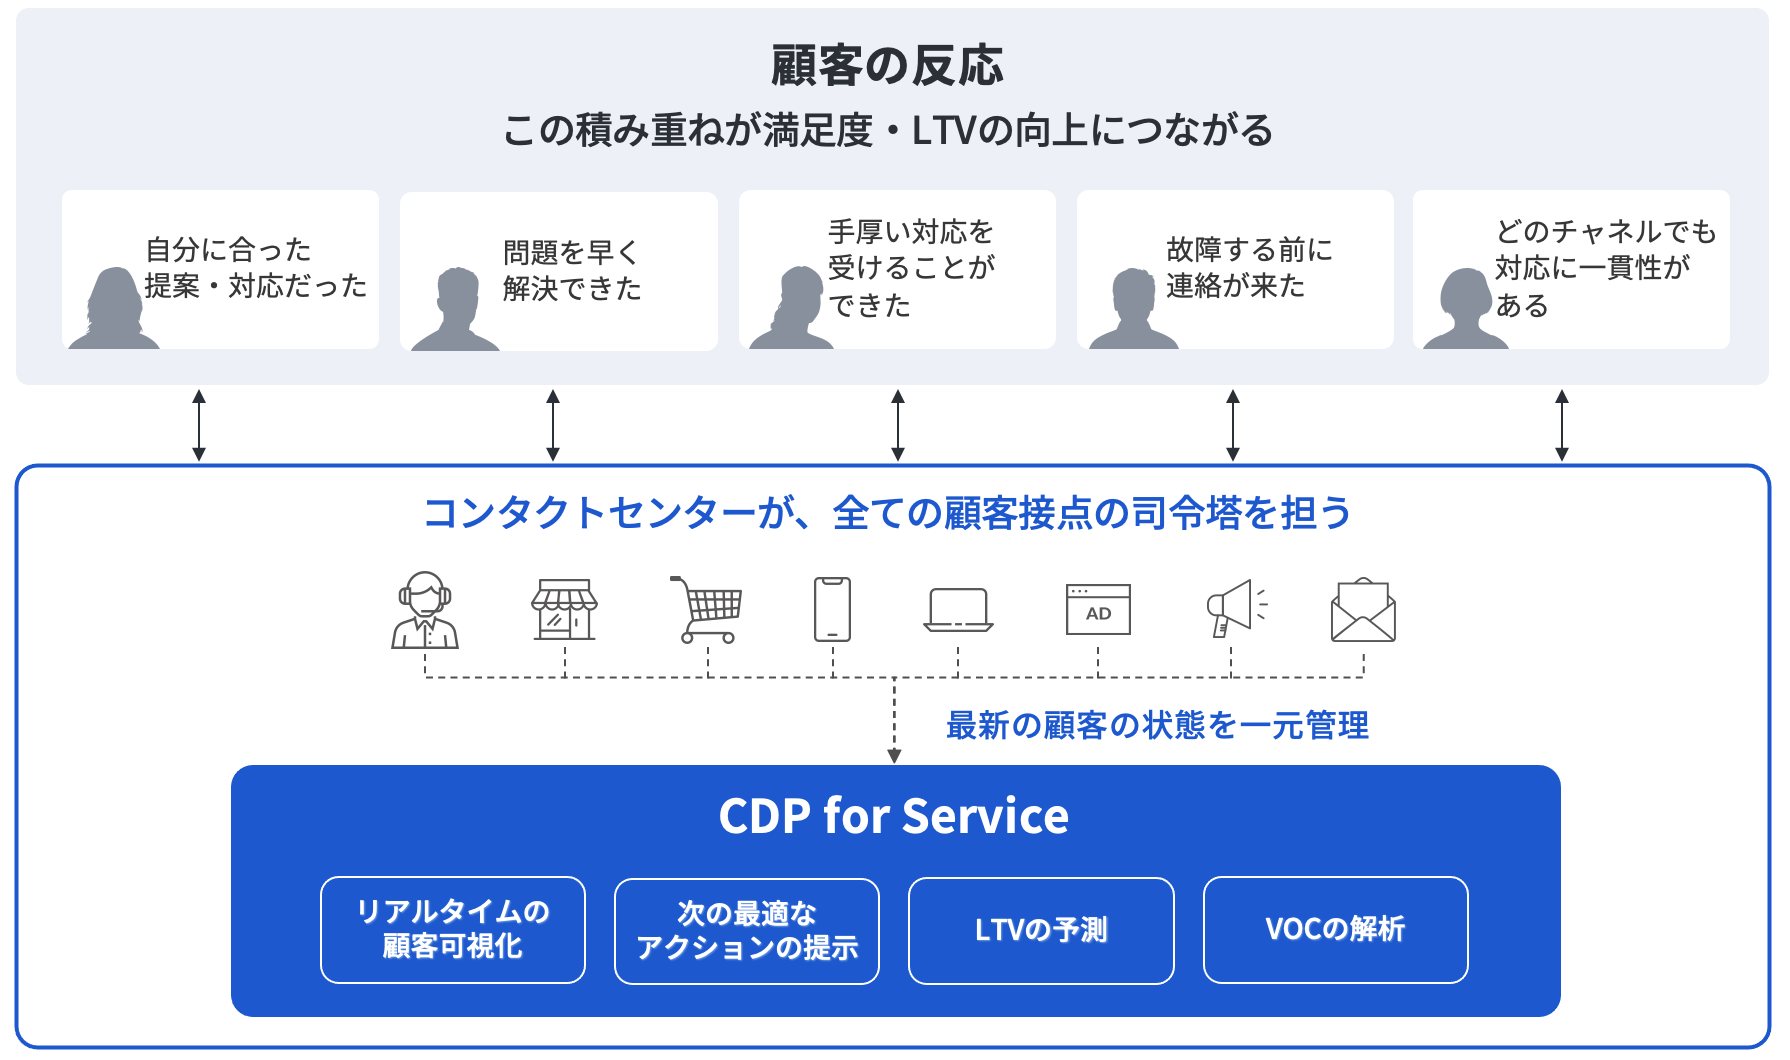 Treasure Data CDP for Service 構成/顧客の反応